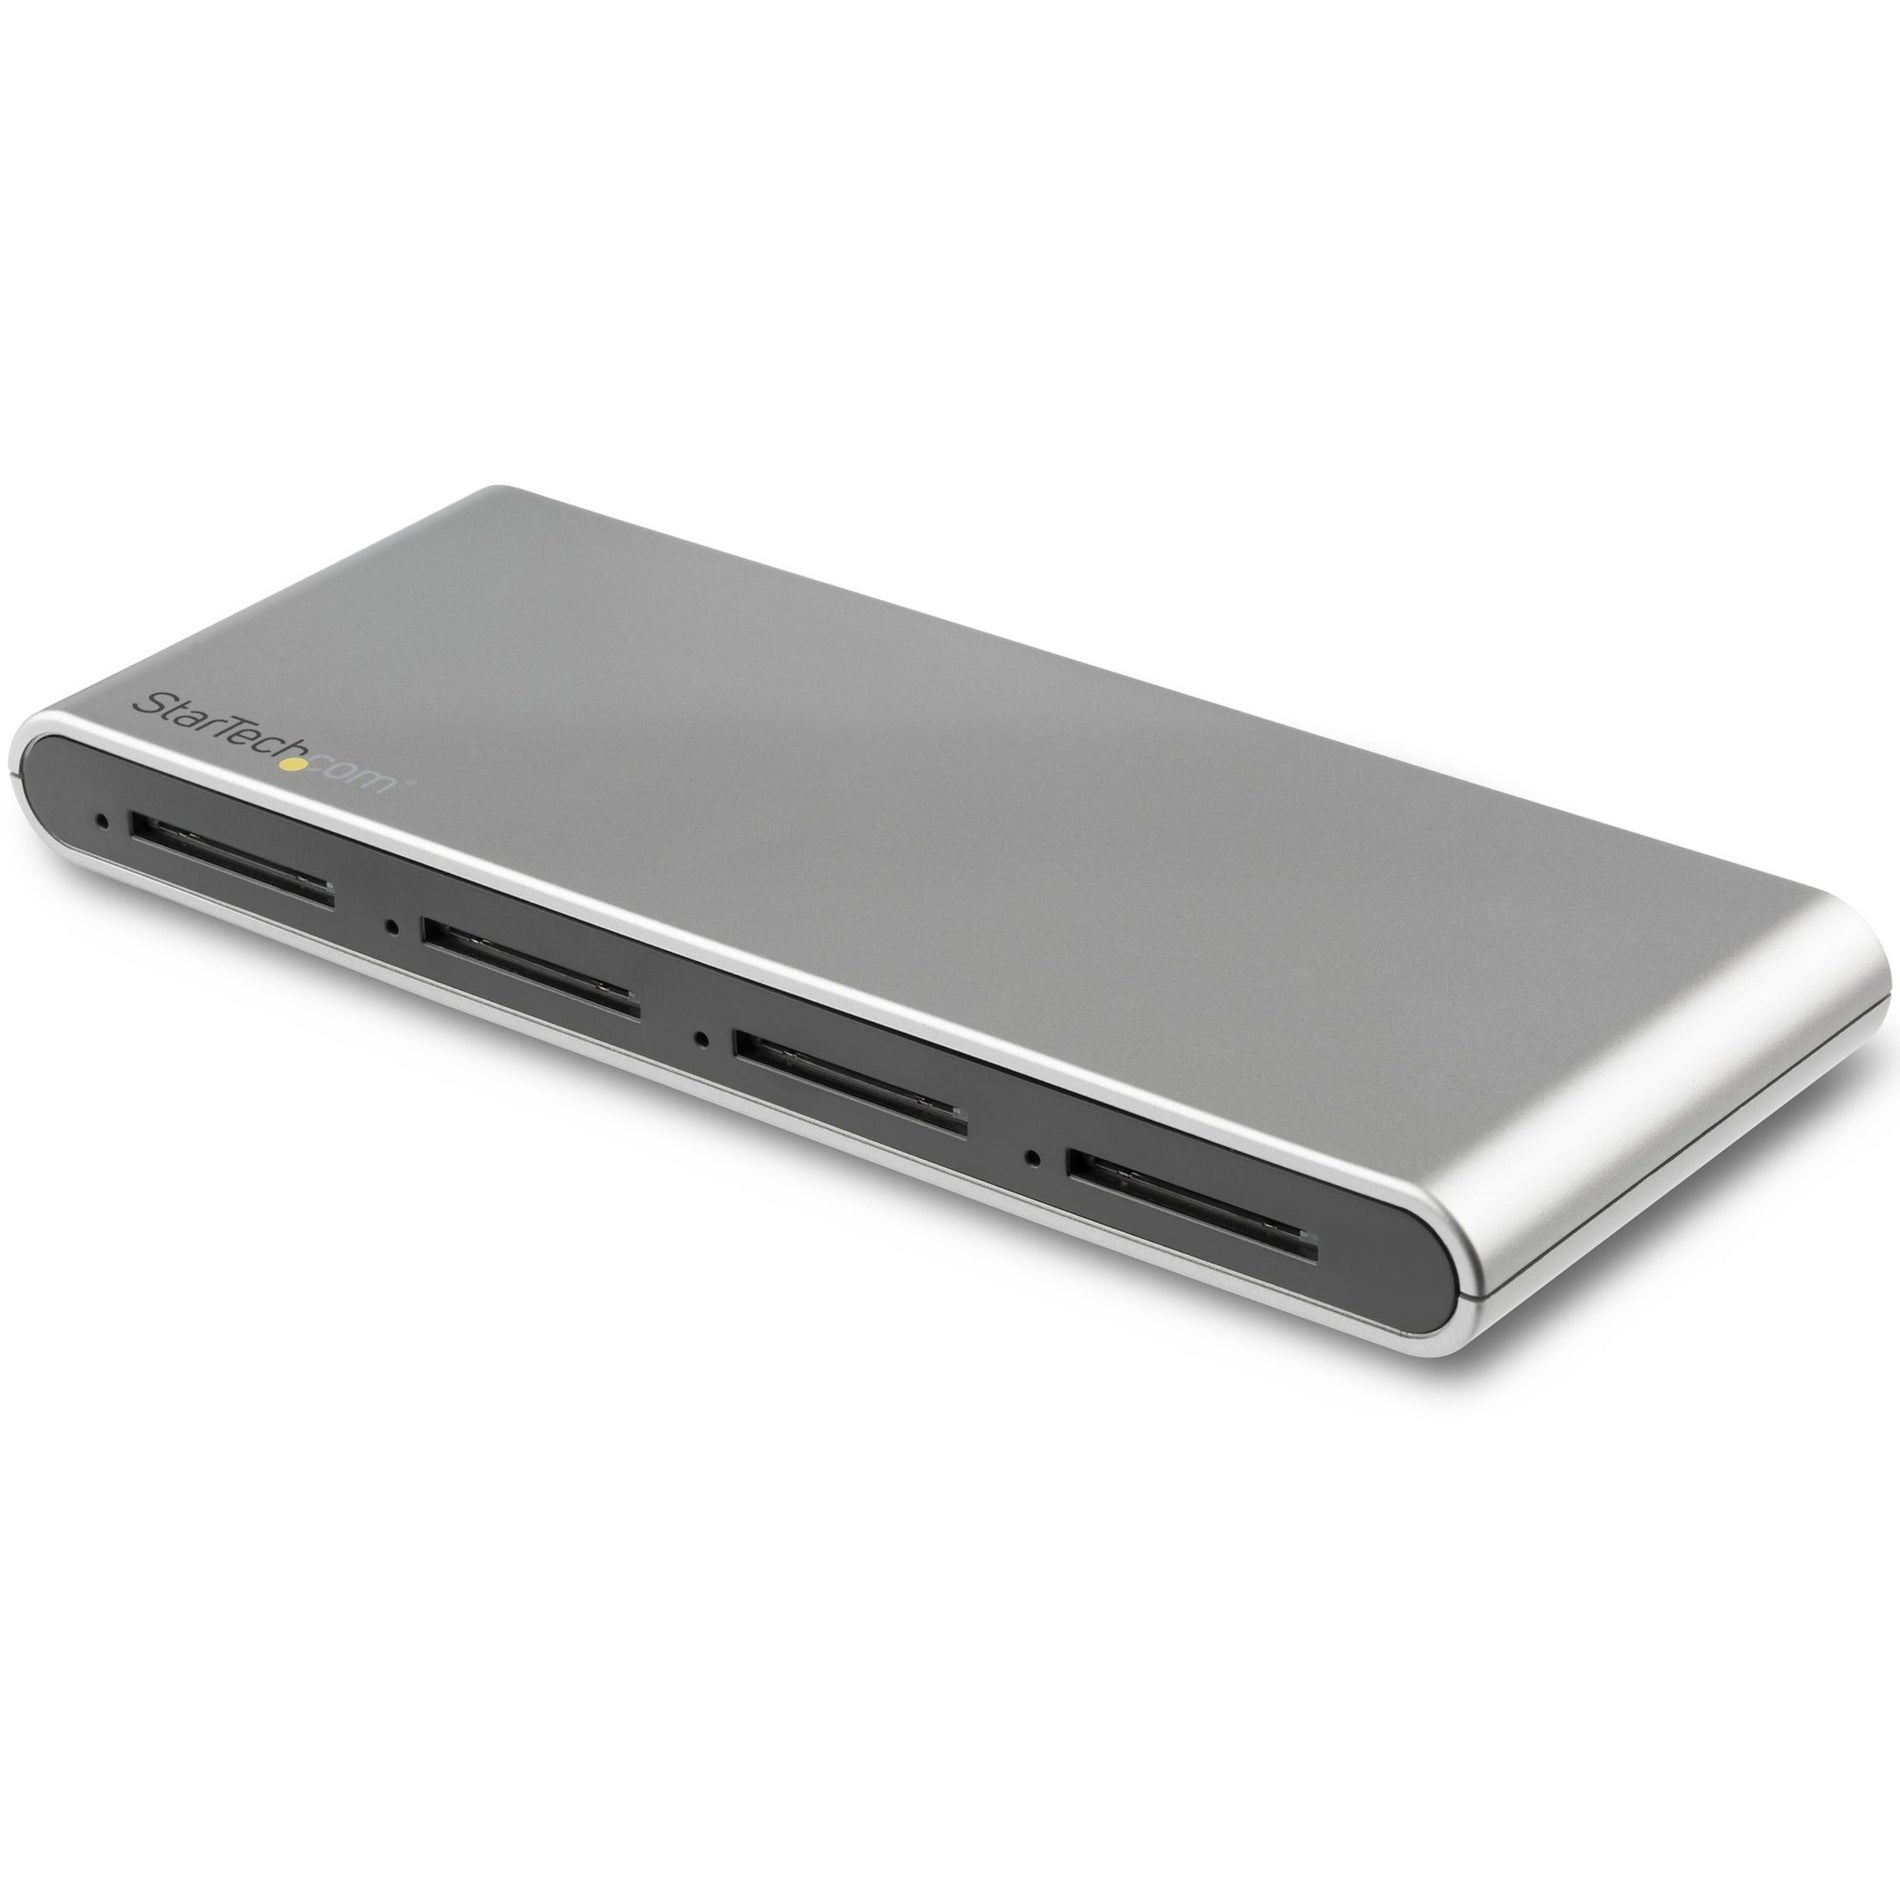 StarTech.com 4SD4FCRU31C 4-Slot USB-C SD Card Reader - USB 3.1 (10Gbps) - SD 4.0 UHS-II, Multi SD Card Reader